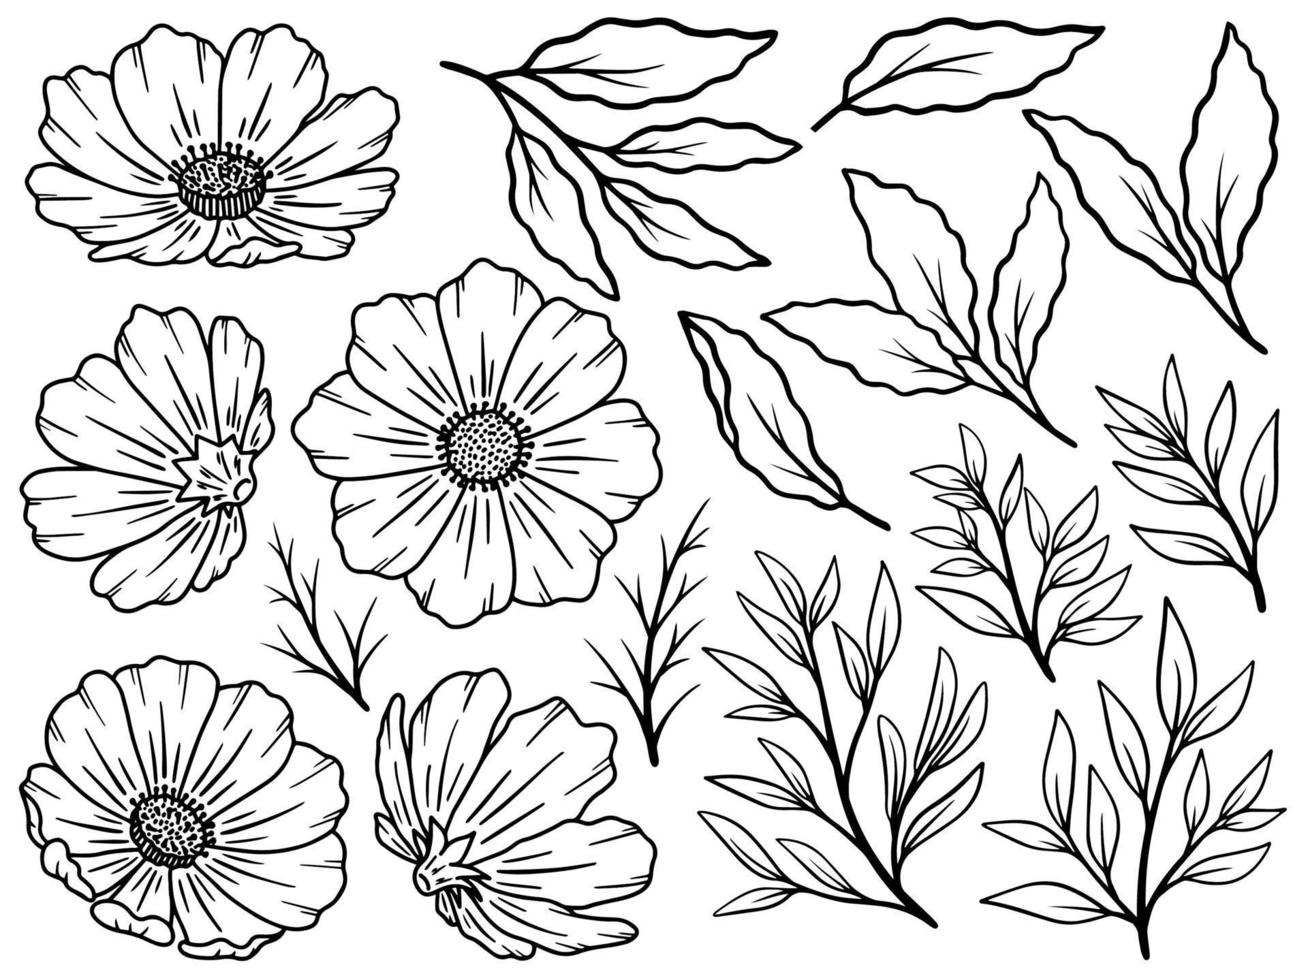 Flower line art arrangement vector